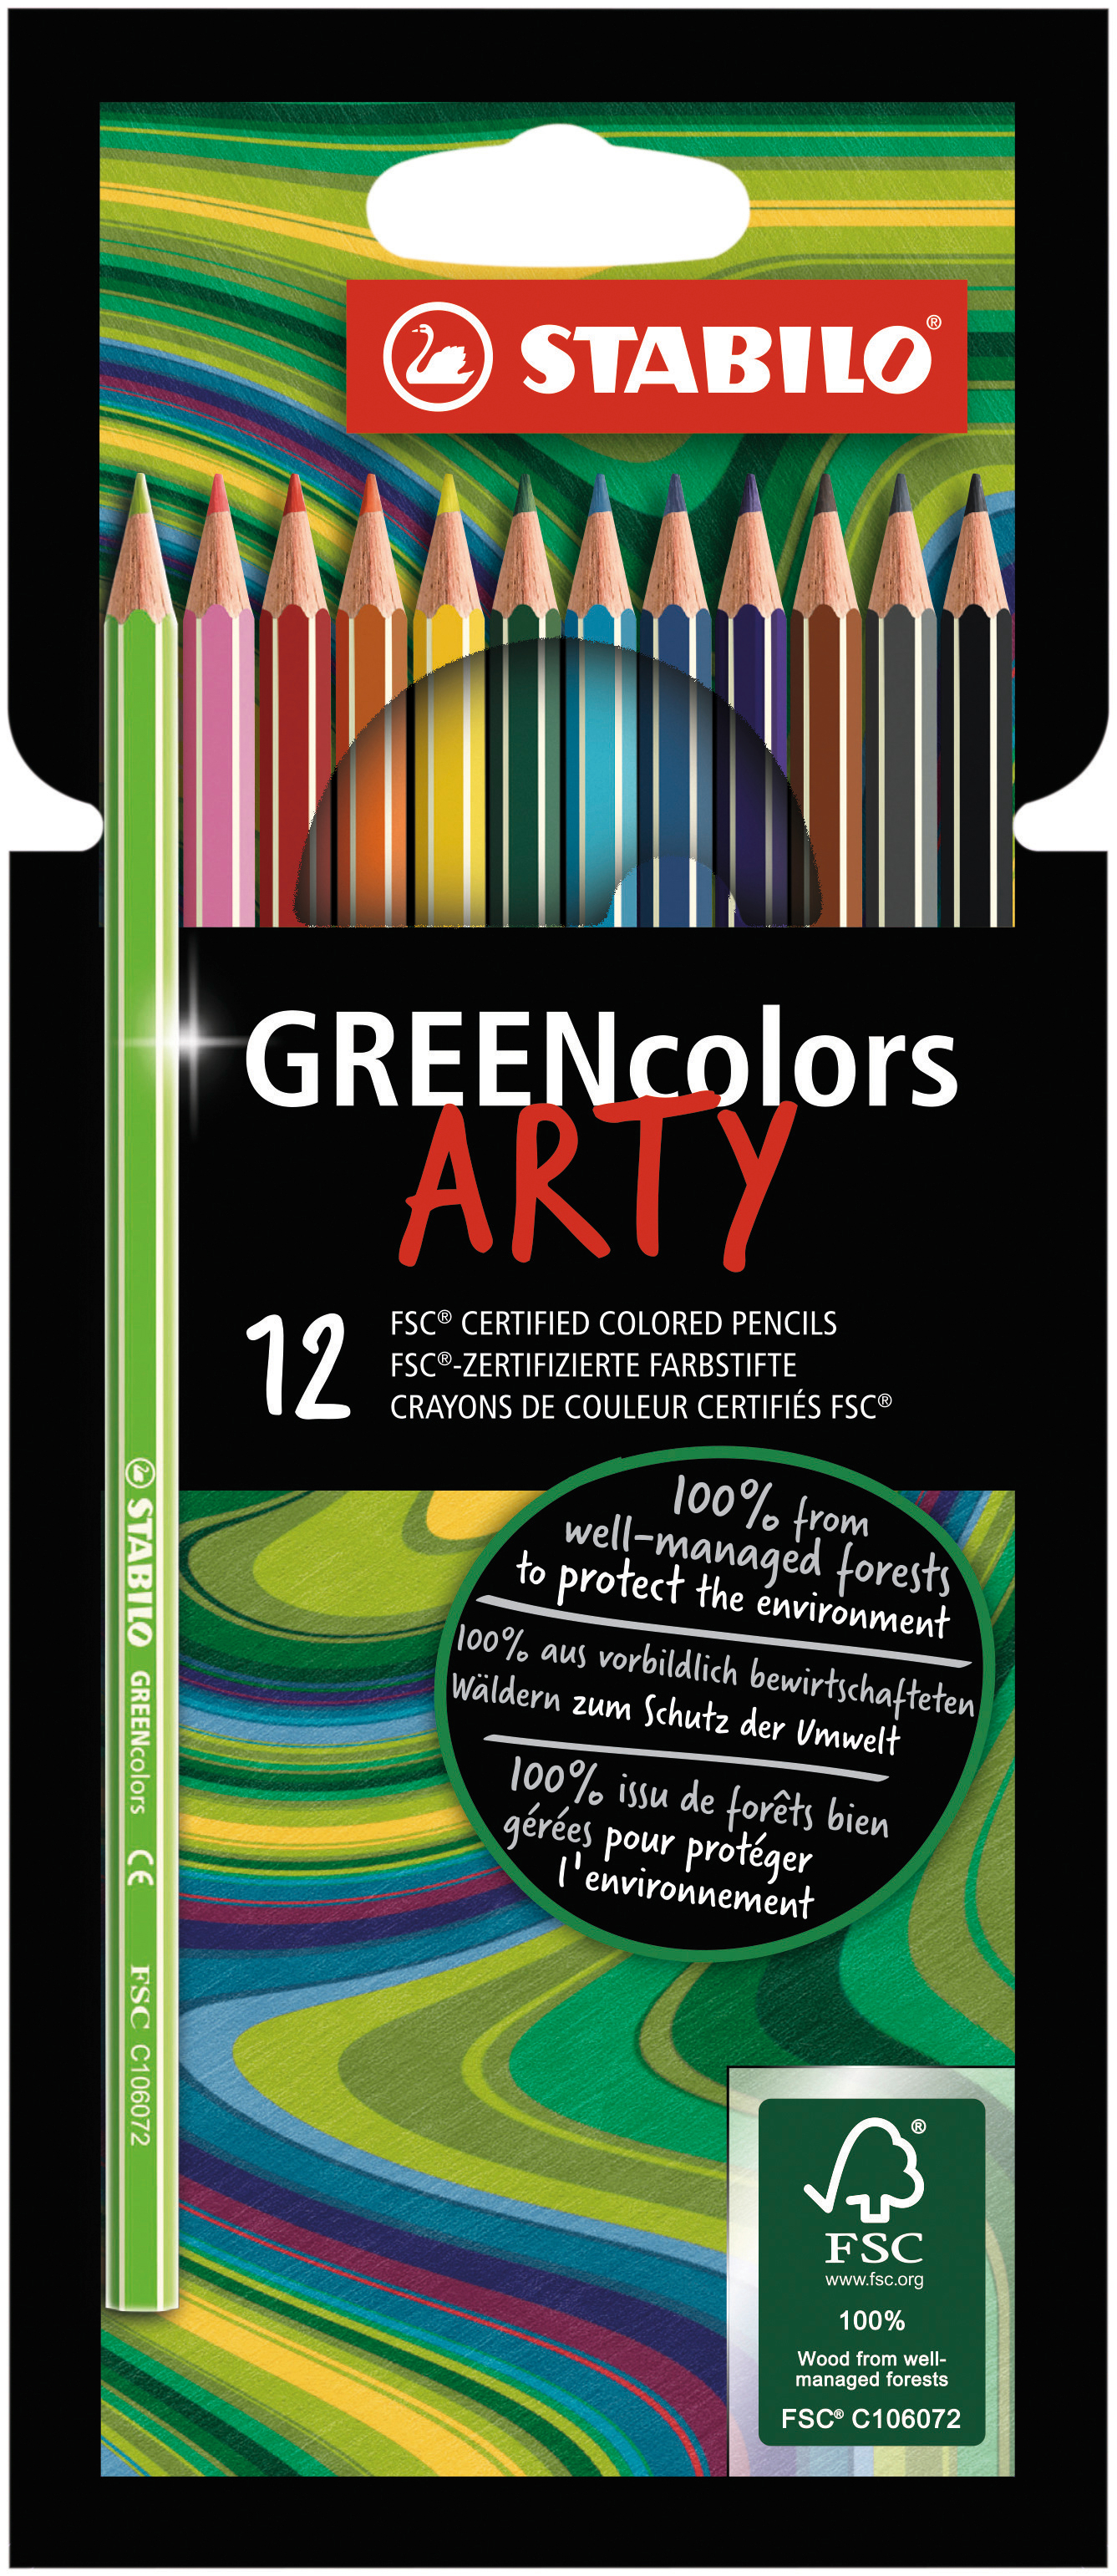 STABILO Farbstift ARTY 106019112 GREENcolors, 12 Stück